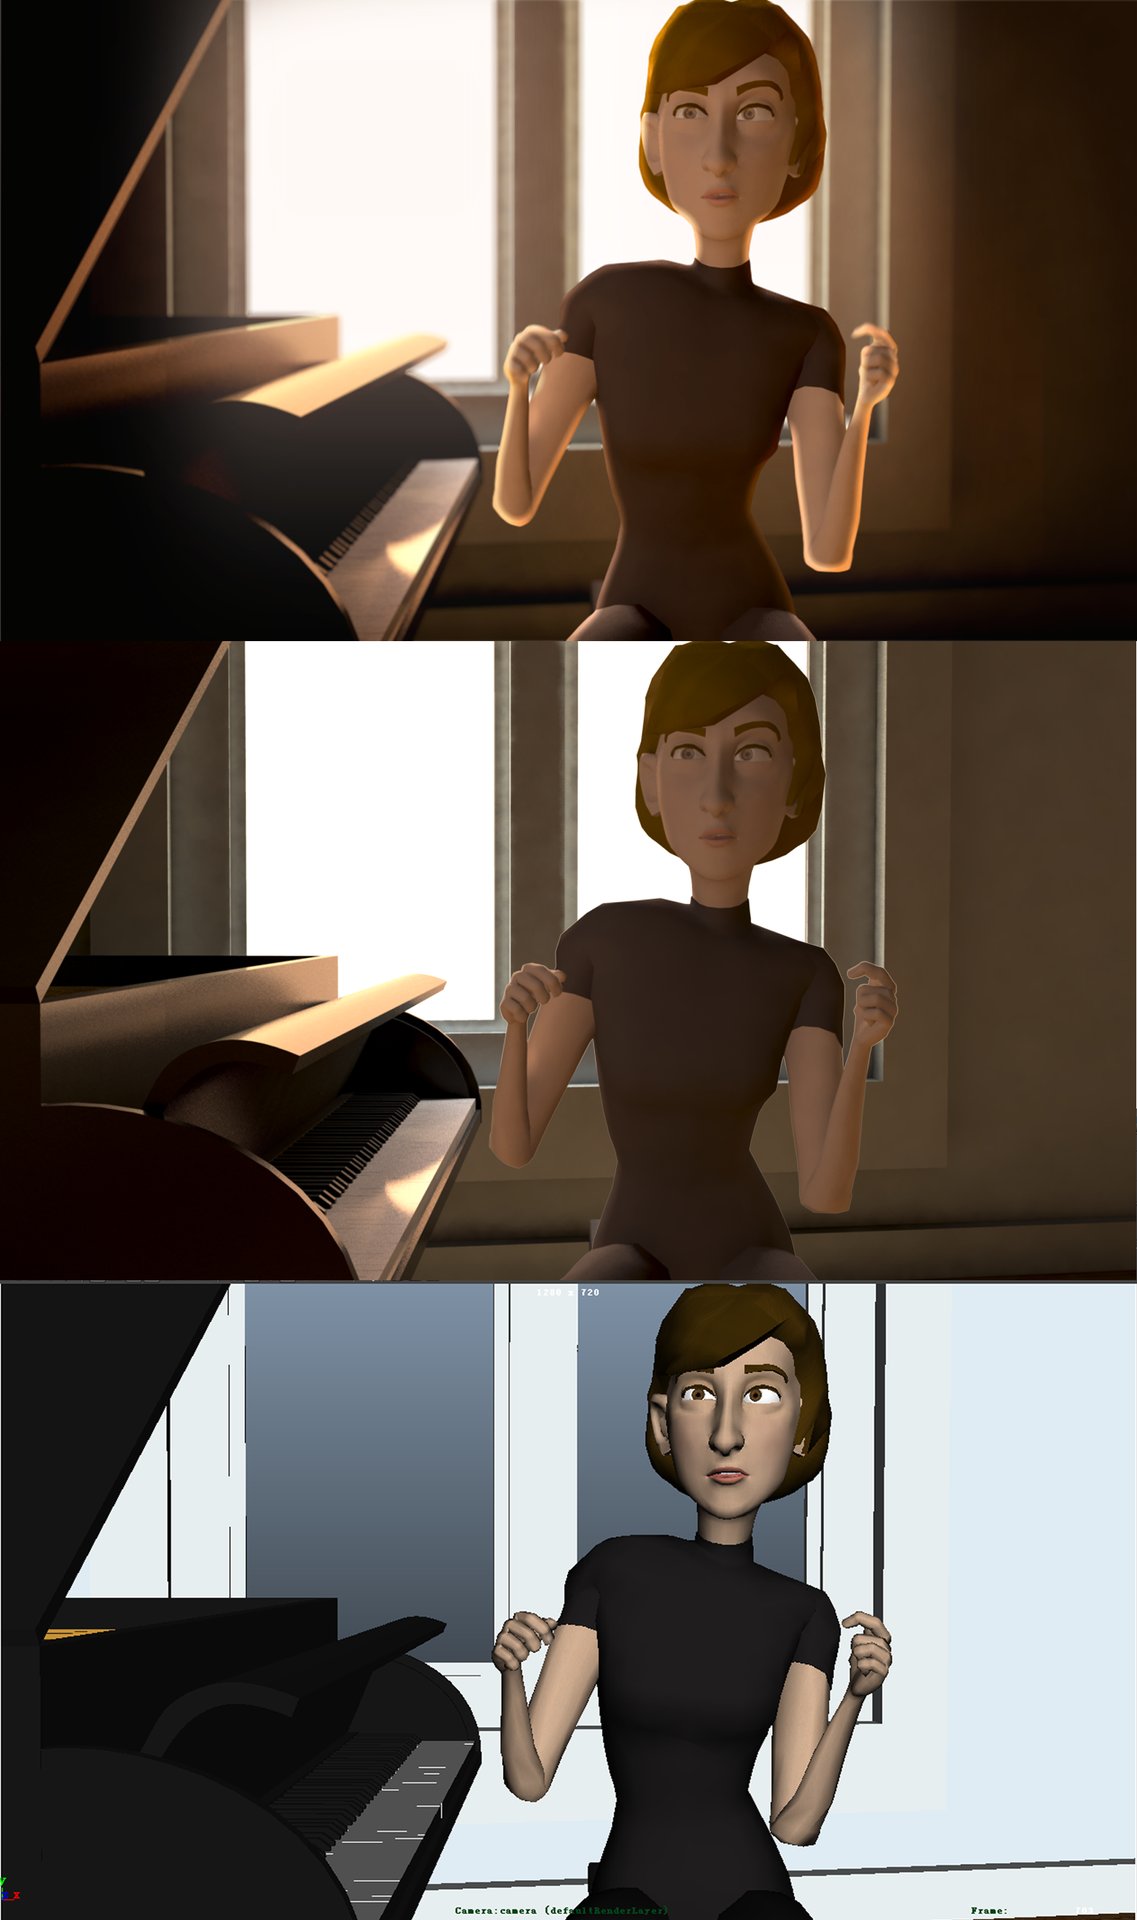 Naomi Hibbert - Composite work for my animated short 'Interpolation'